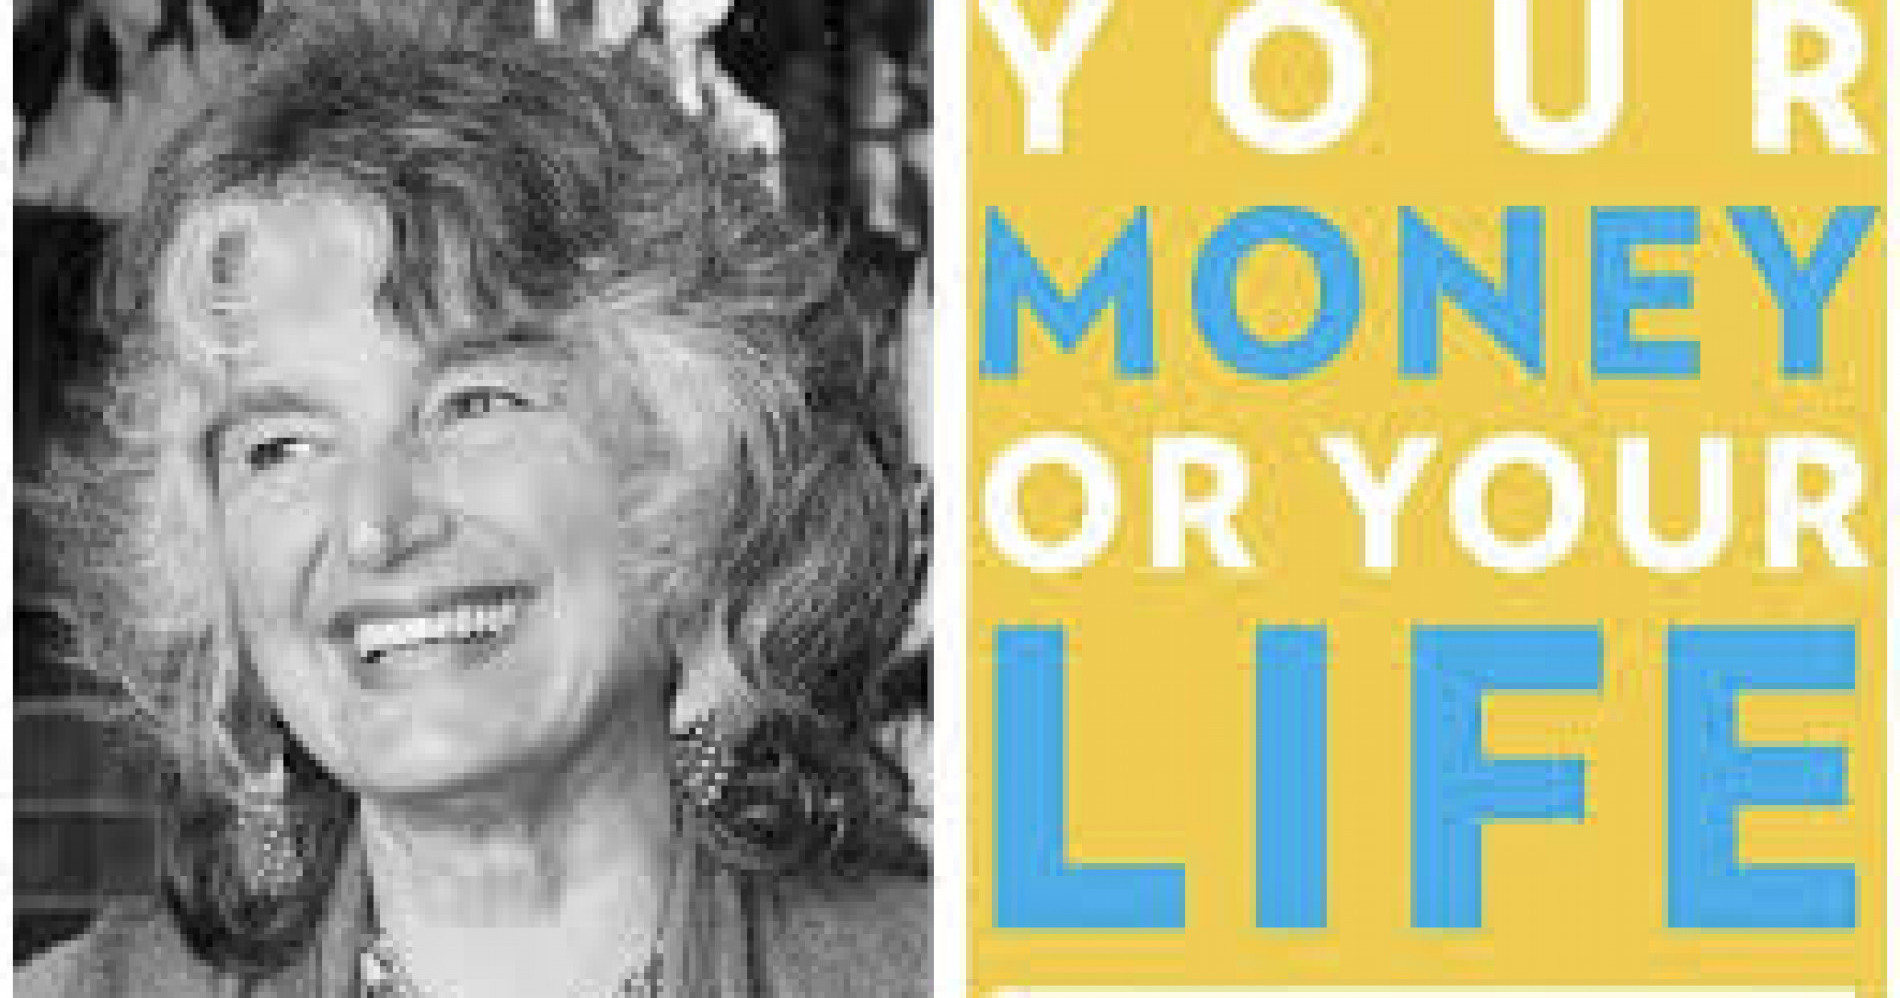 Ilustrasi buku "Your Money or Your Life" dengan pengarangnya, Vicki Robin. (Sumber gambar: hermoney.com)